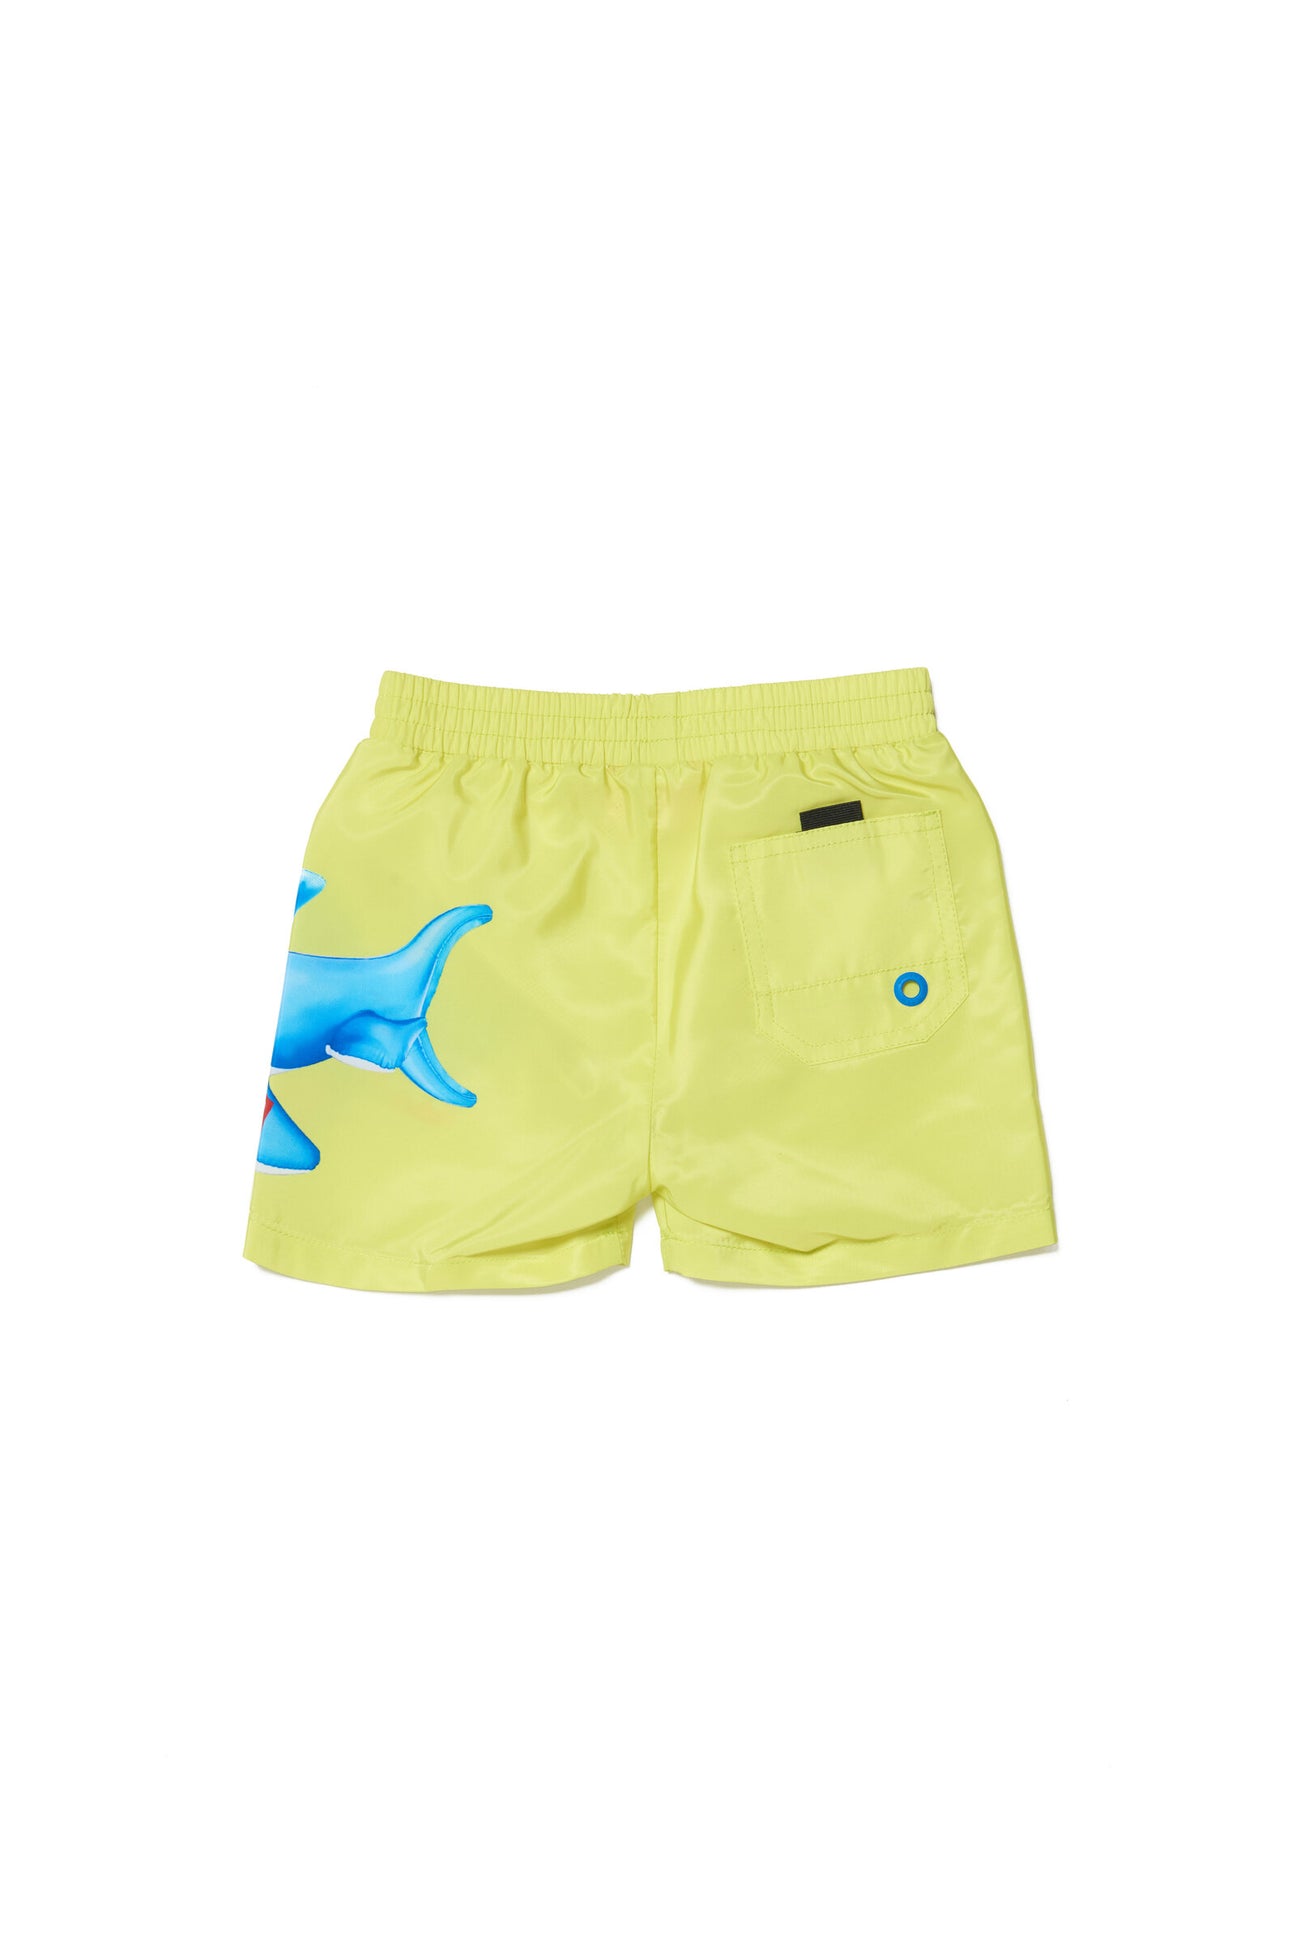 Yellow lycra boxer shorts with shark print Yellow lycra boxer shorts with shark print